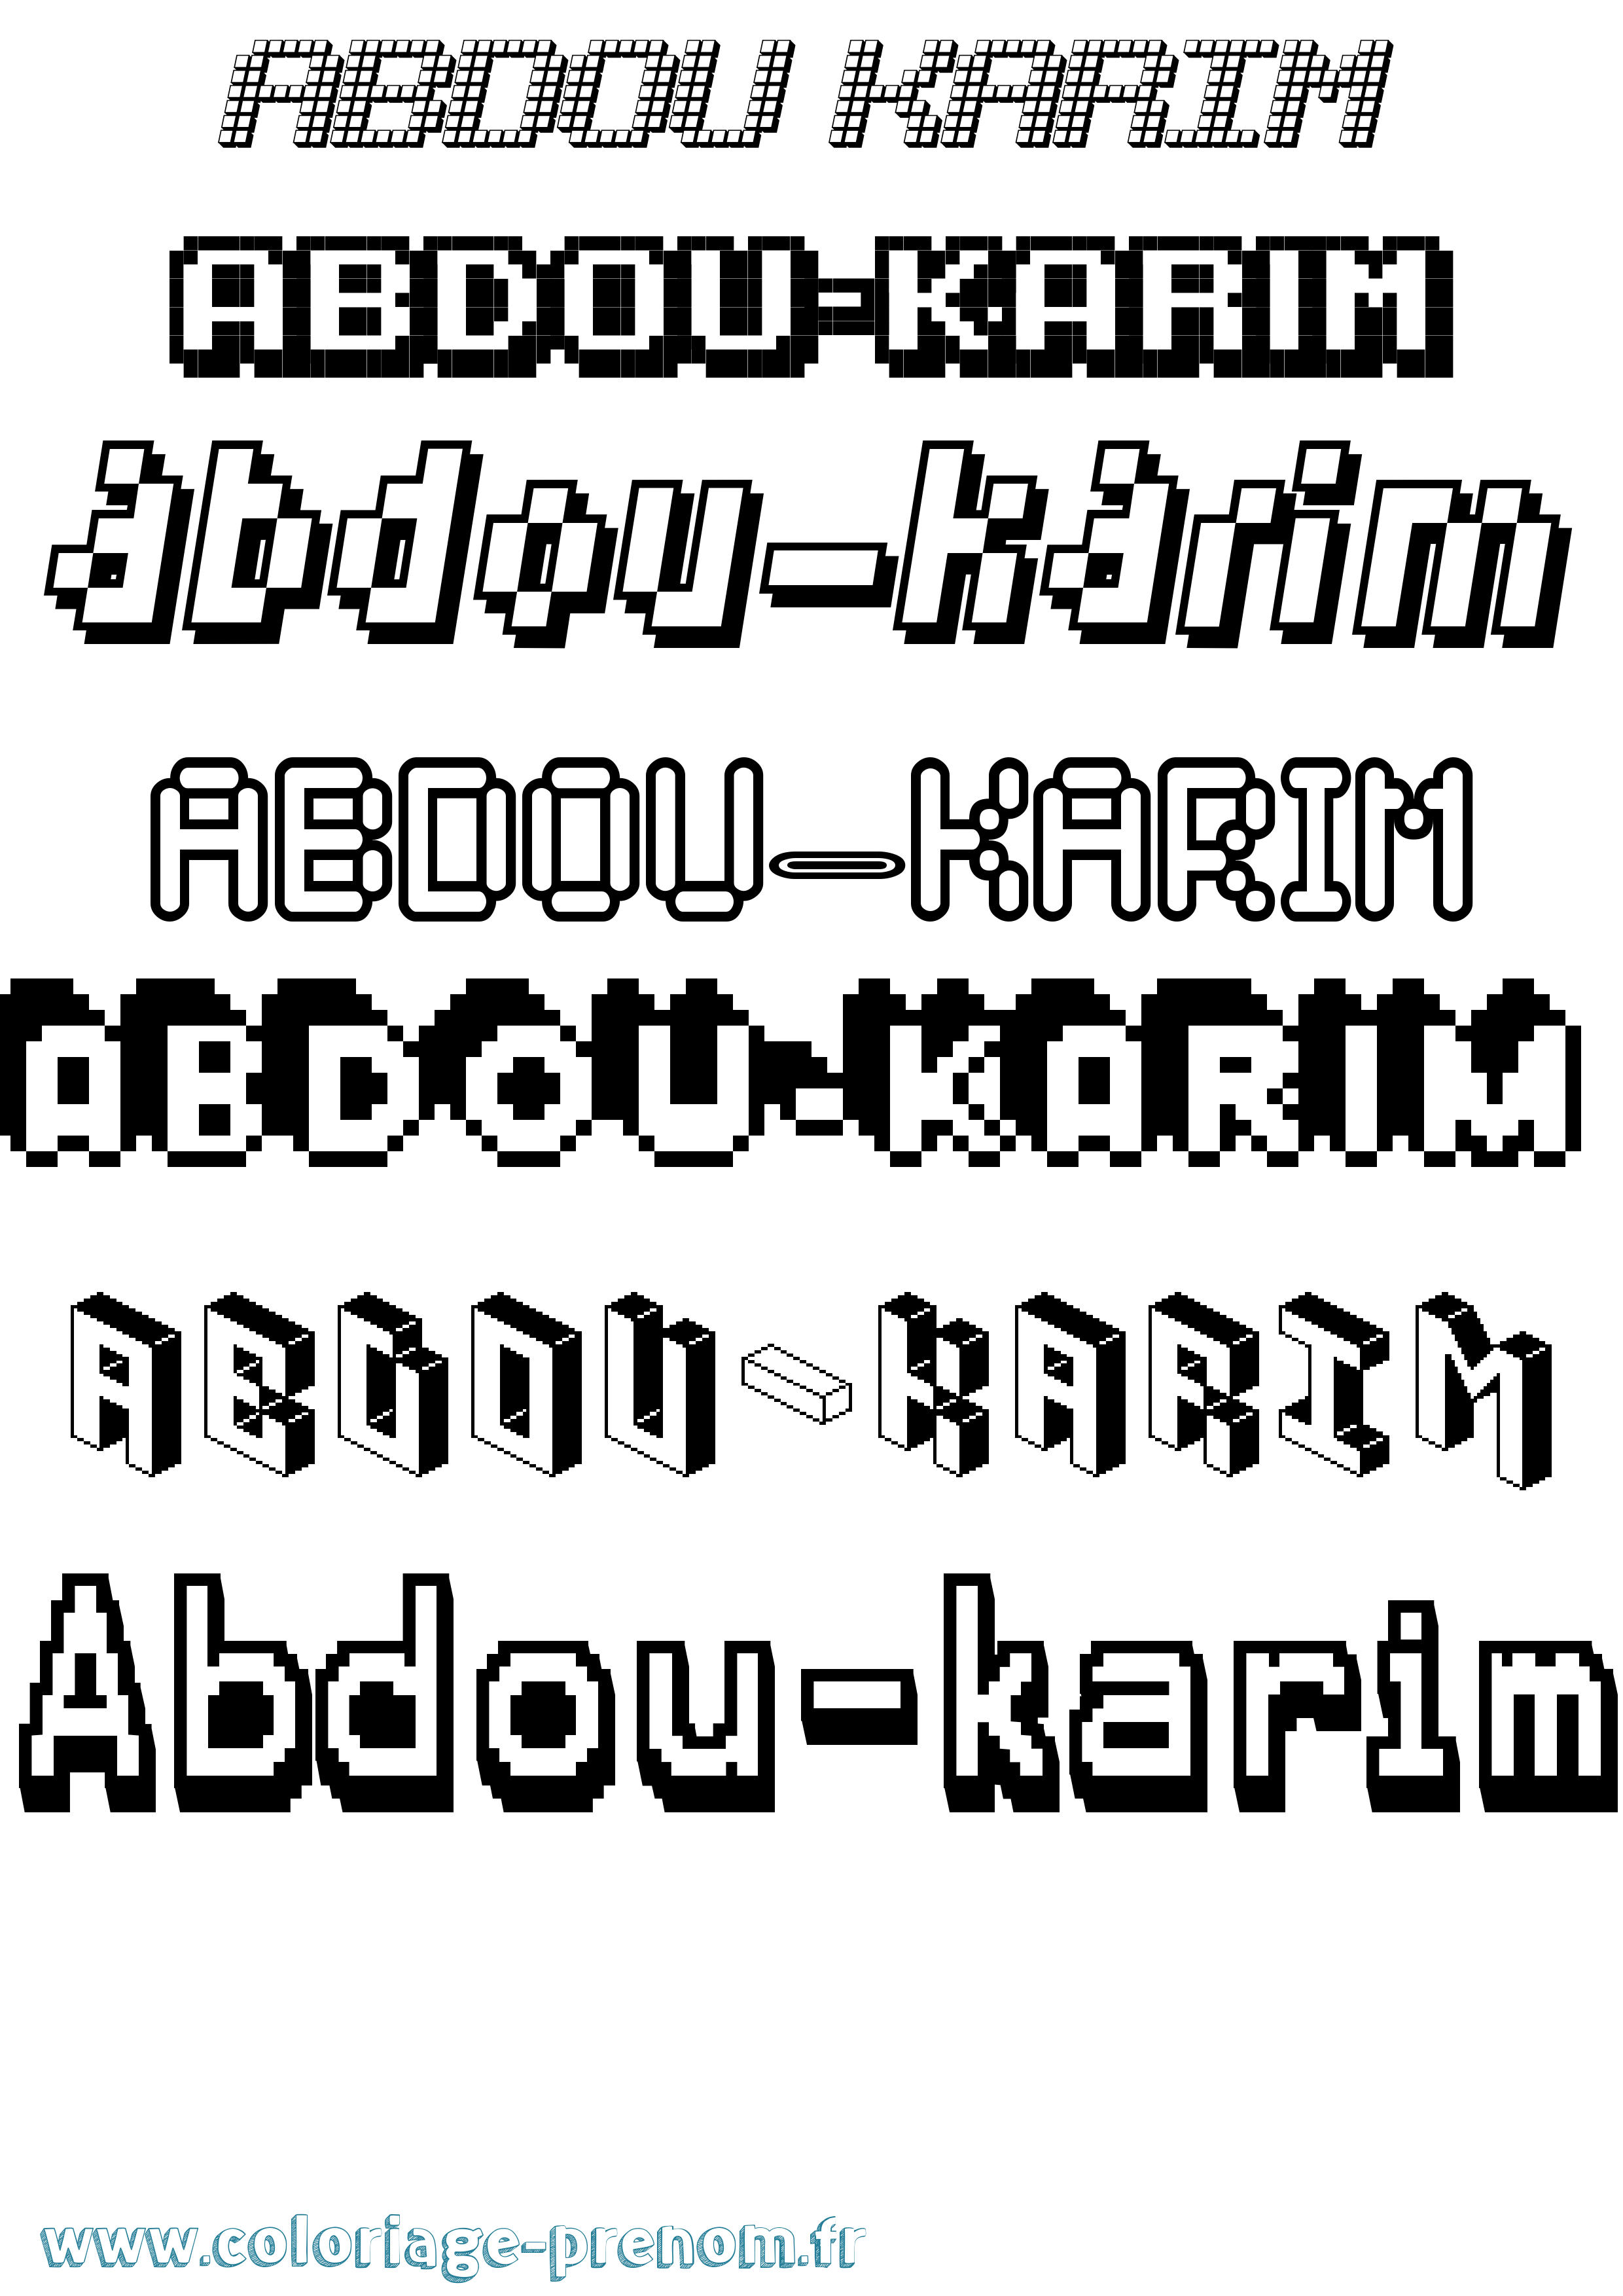 Coloriage prénom Abdou-Karim Pixel